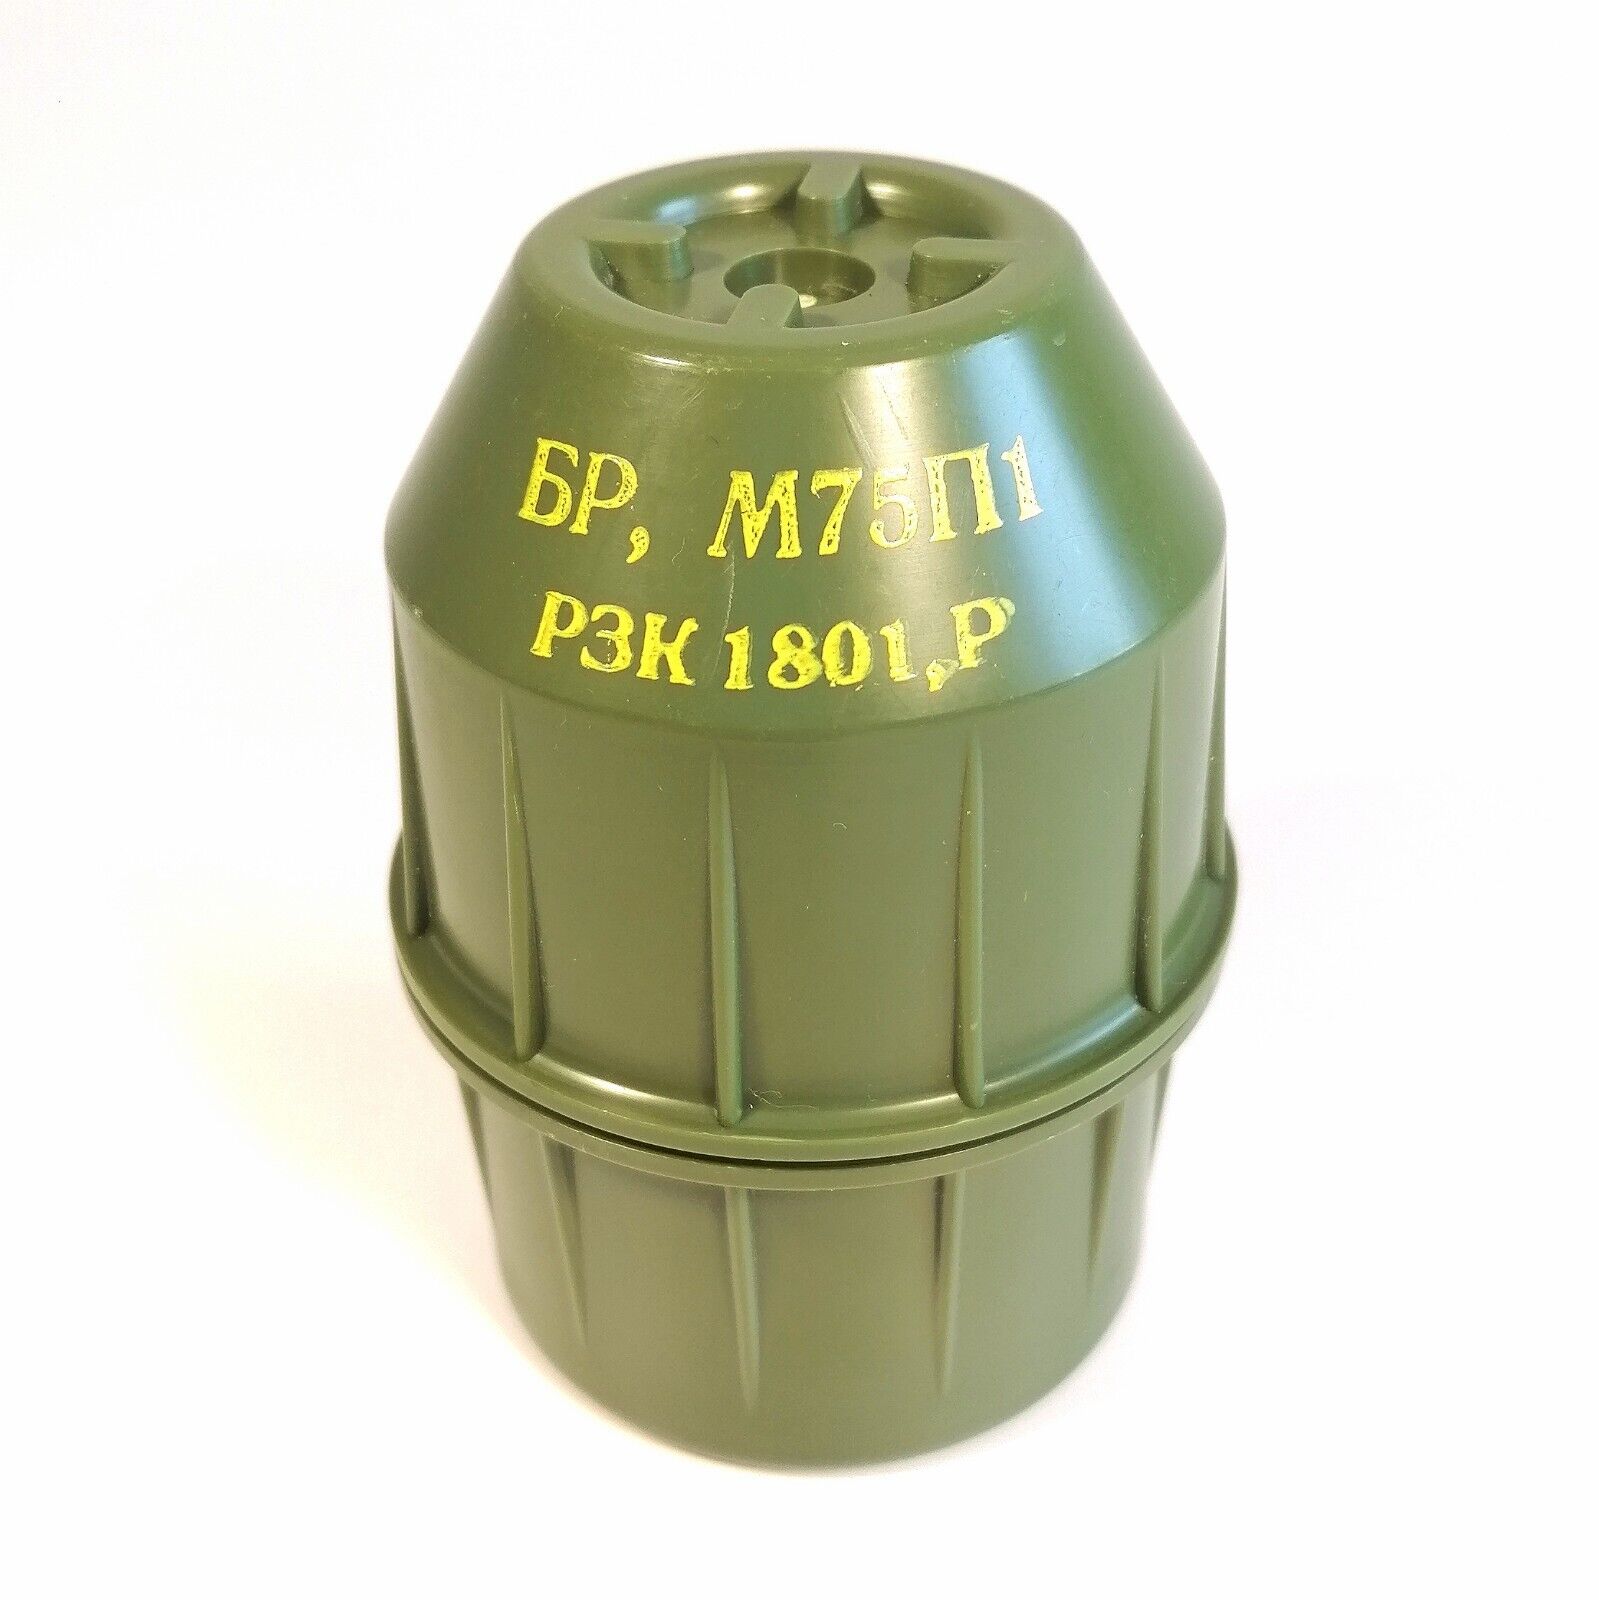 Lot of 50pcs Genuine Yugo Serbian military Grenade Case for M75 army HandGrenade